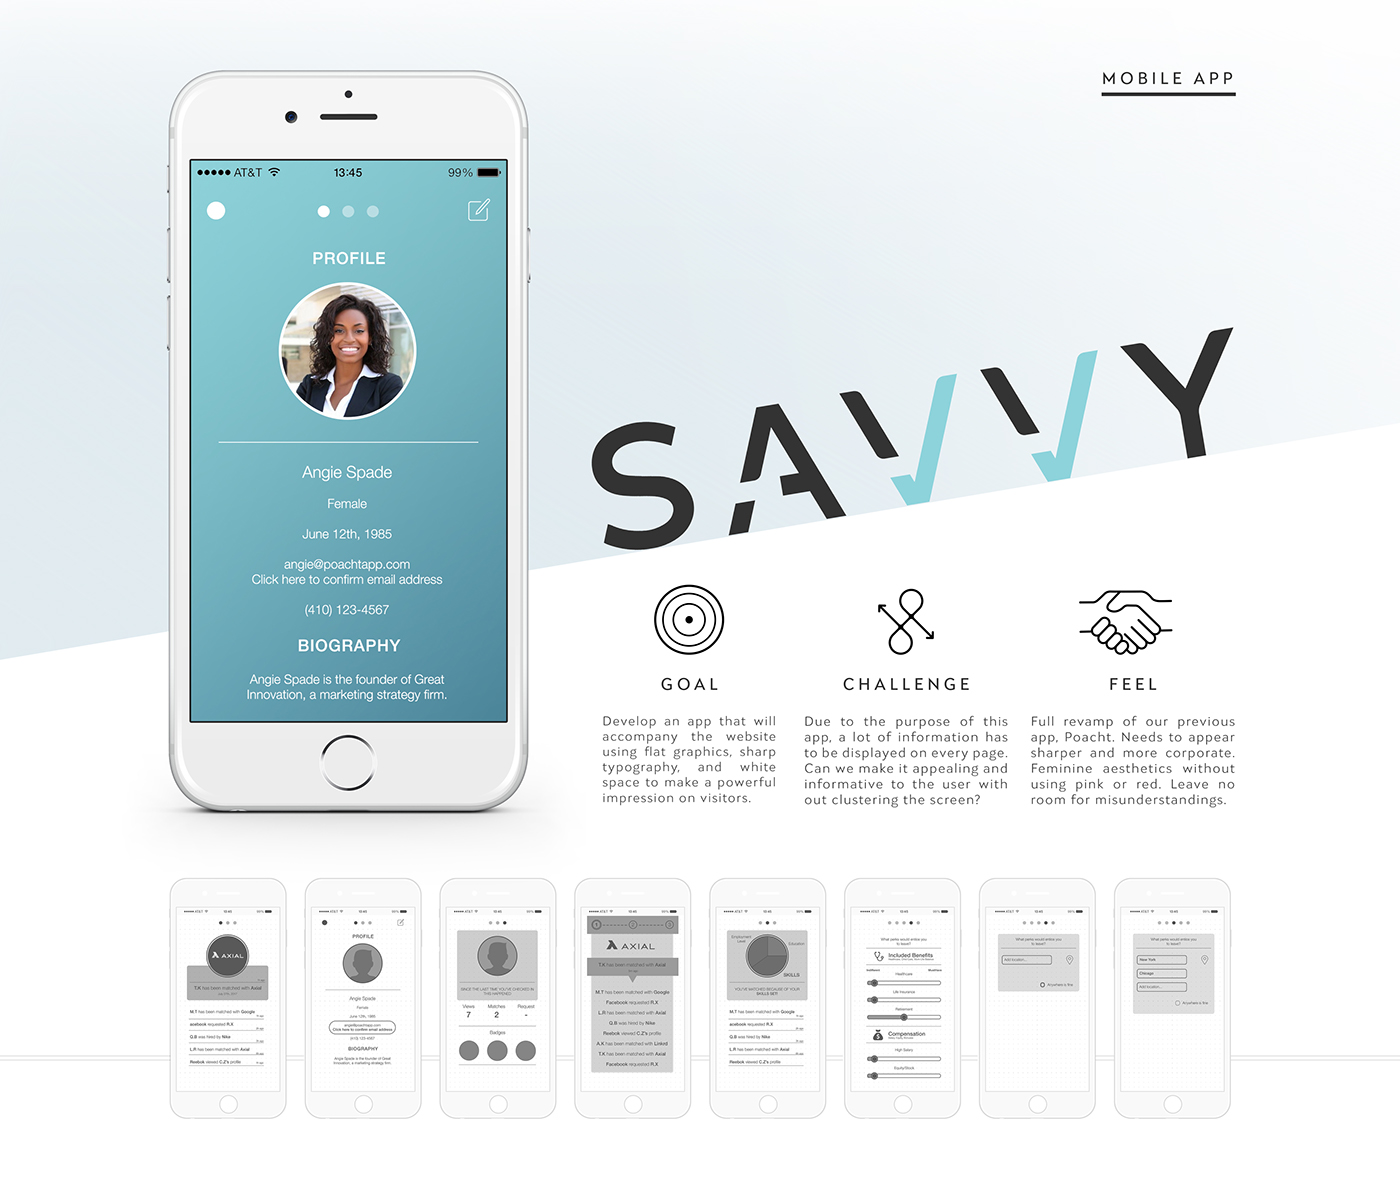 savvy savvy jobs app Web design interaction pocket RECRUITER Matteo Iavicoli lavicoli female TAlent wwebsite Poacht